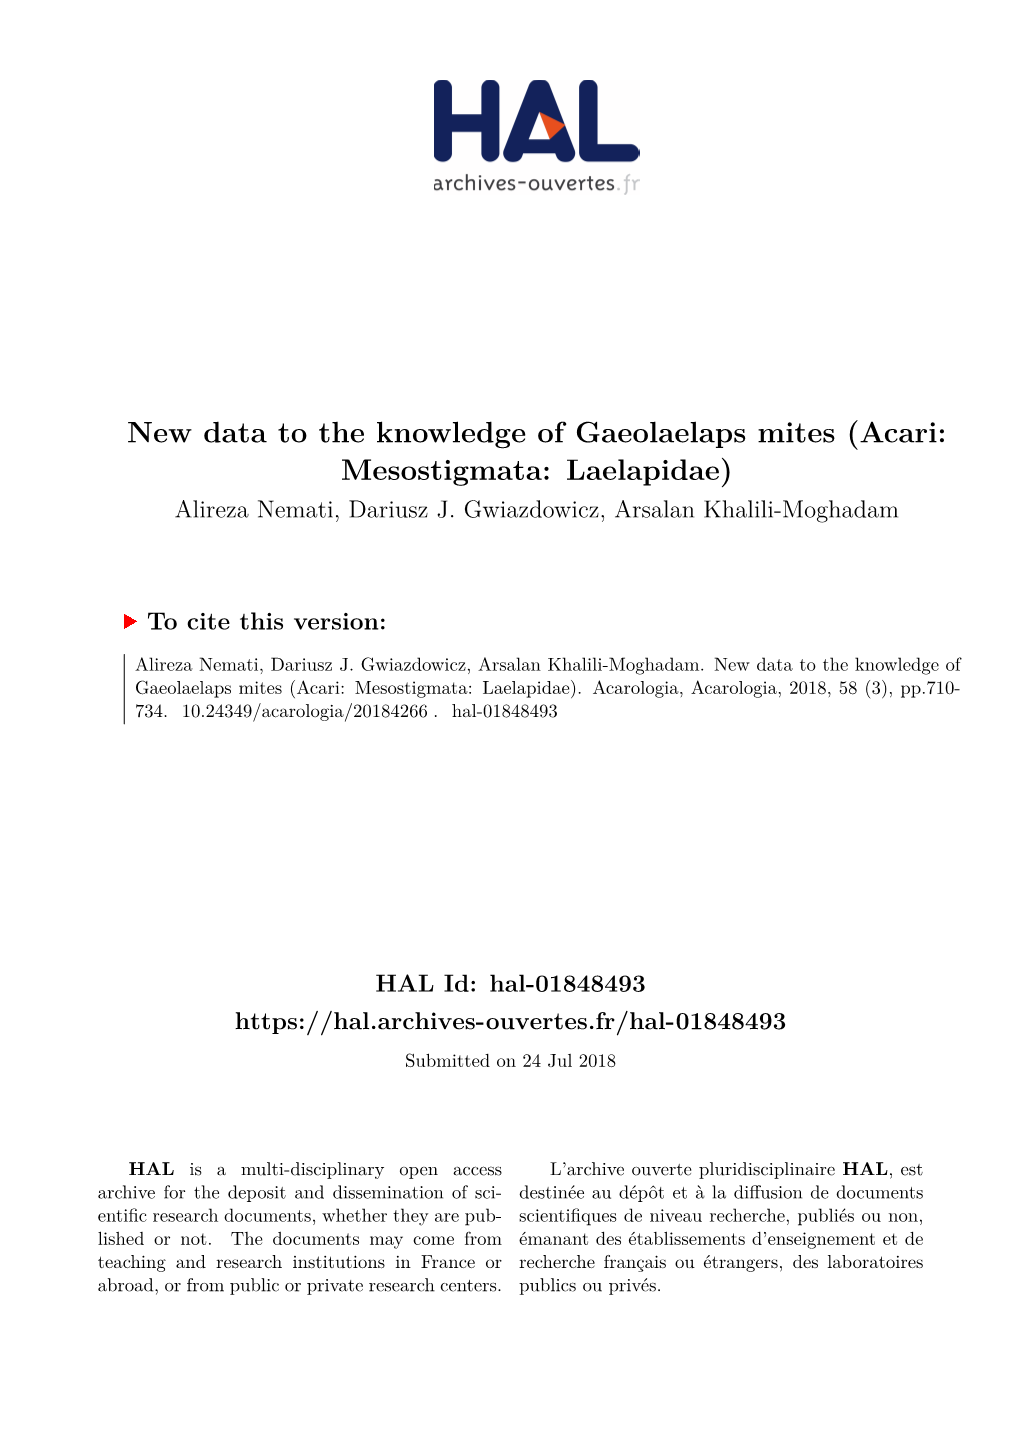 New Data to the Knowledge of Gaeolaelaps Mites (Acari: Mesostigmata: Laelapidae) Alireza Nemati, Dariusz J